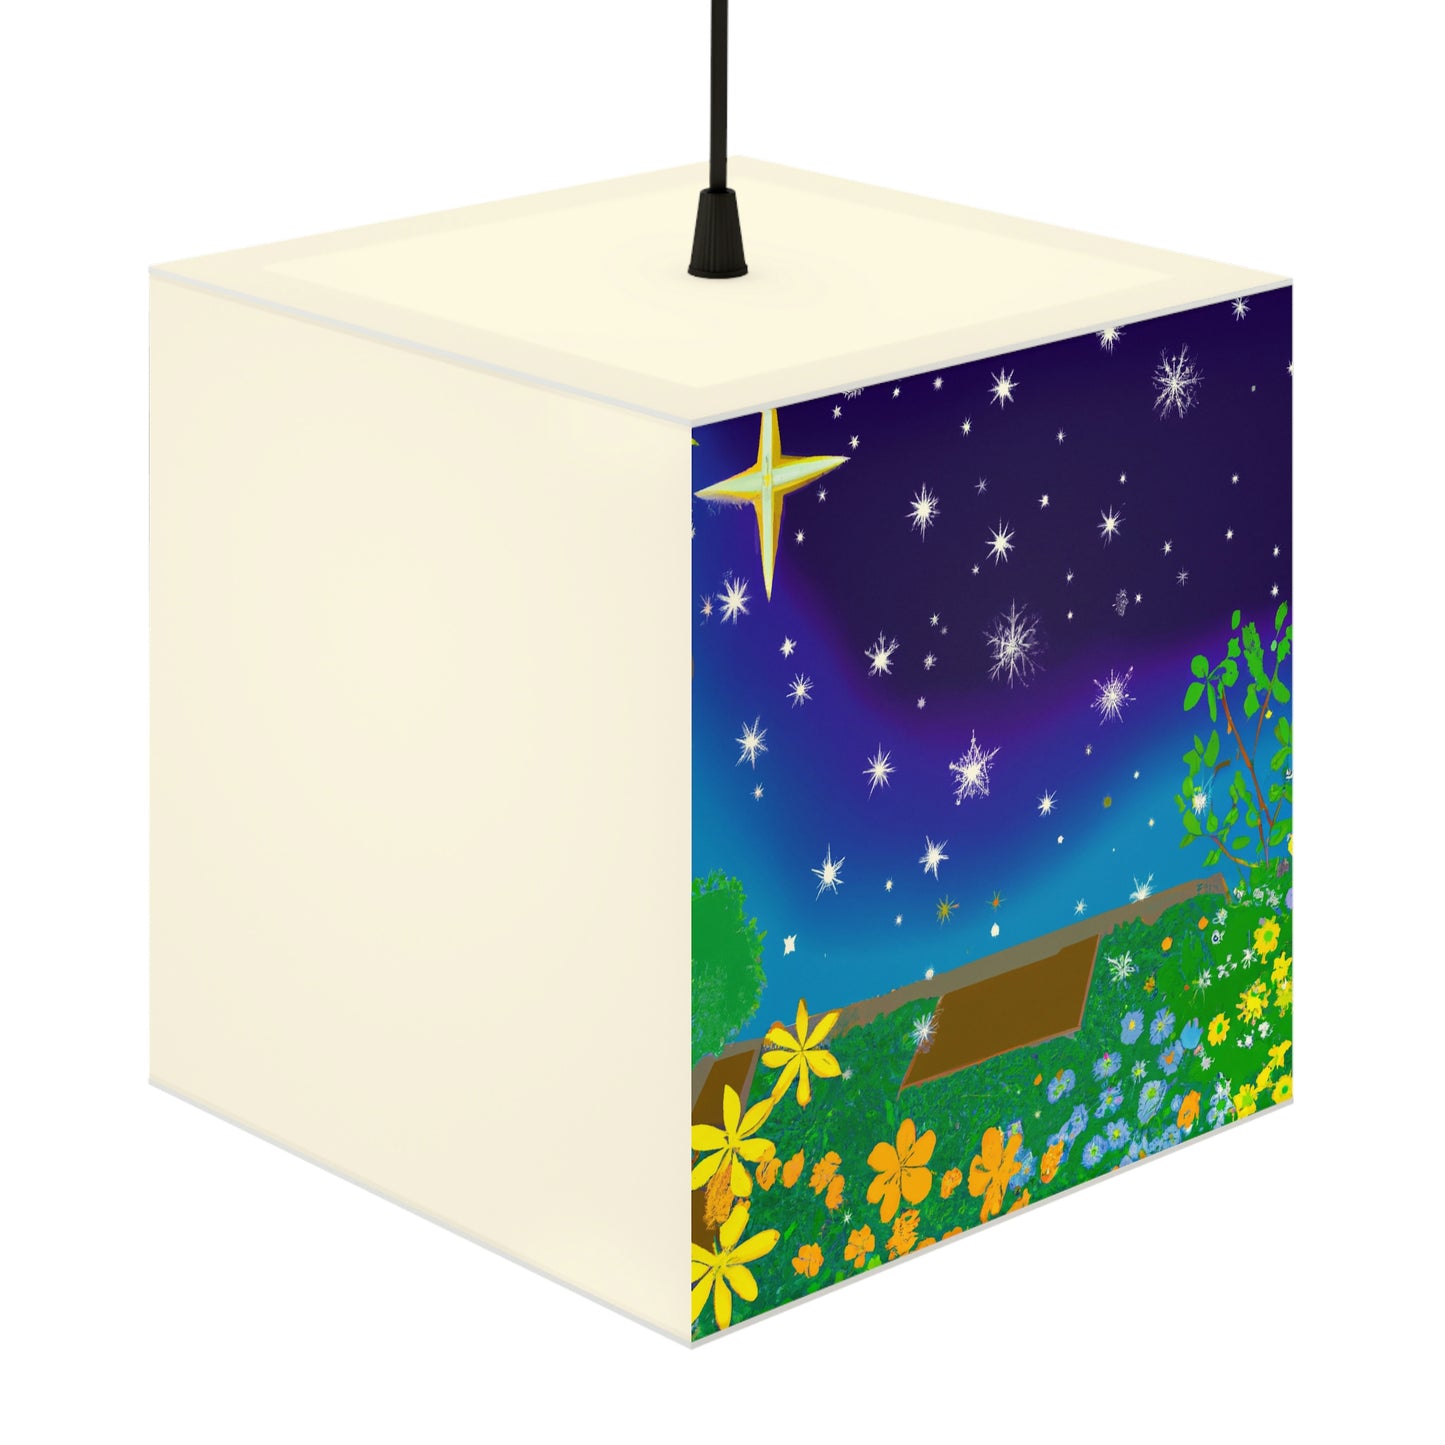 "A Celestial Garden of Color" - The Alien Light Cube Lamp